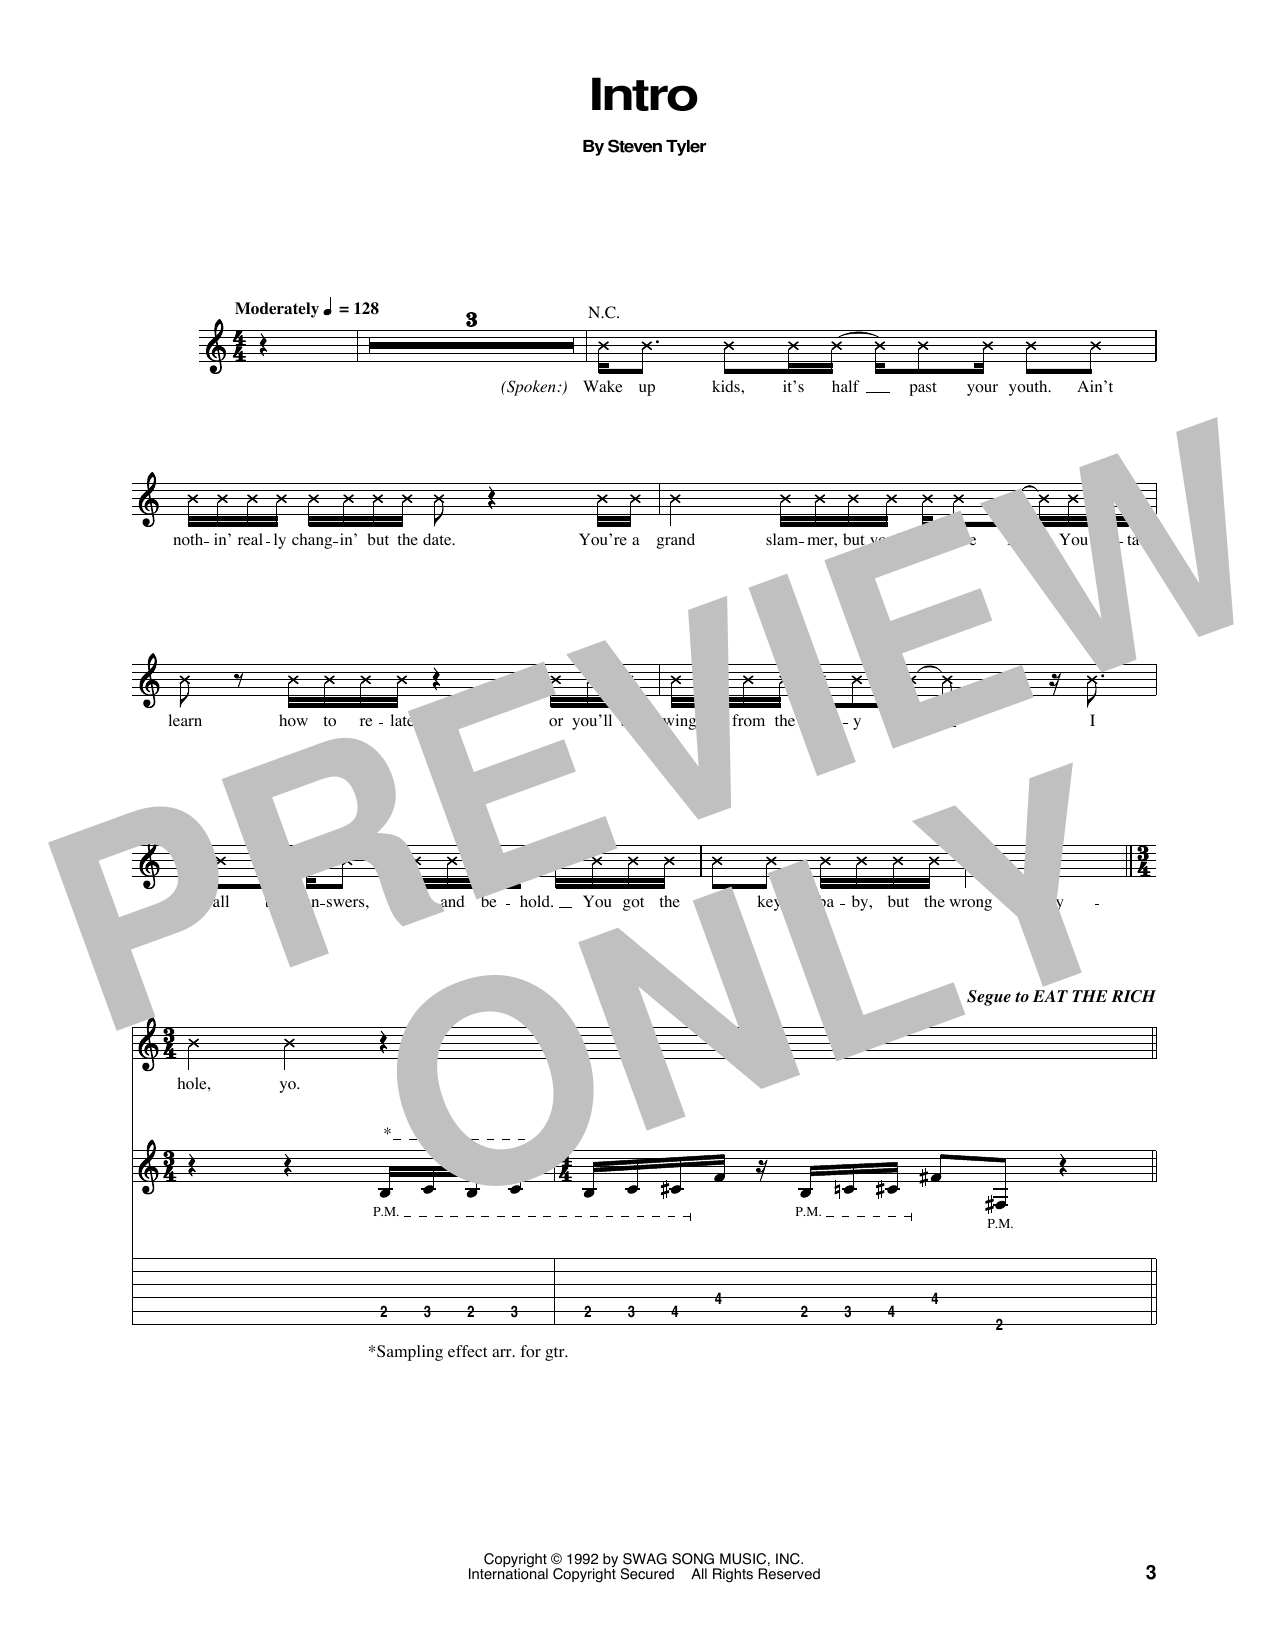 Aerosmith Intro Sheet Music Notes & Chords for Guitar Tab - Download or Print PDF